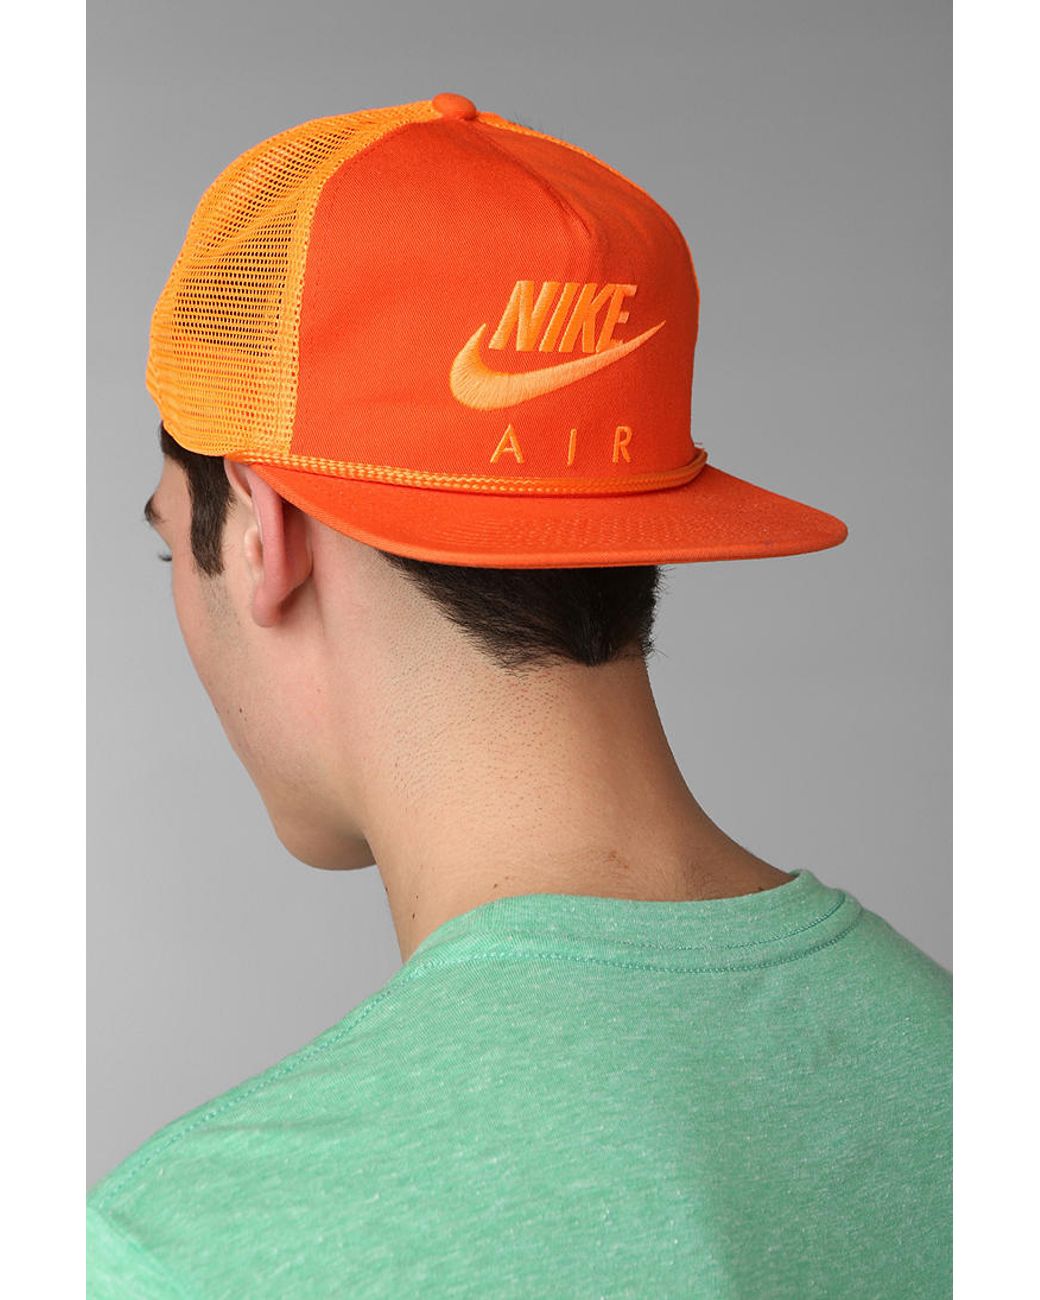 Indica va a decidir Racionalización Urban Outfitters Nike Air Max Snapback Hat in Orange for Men | Lyst